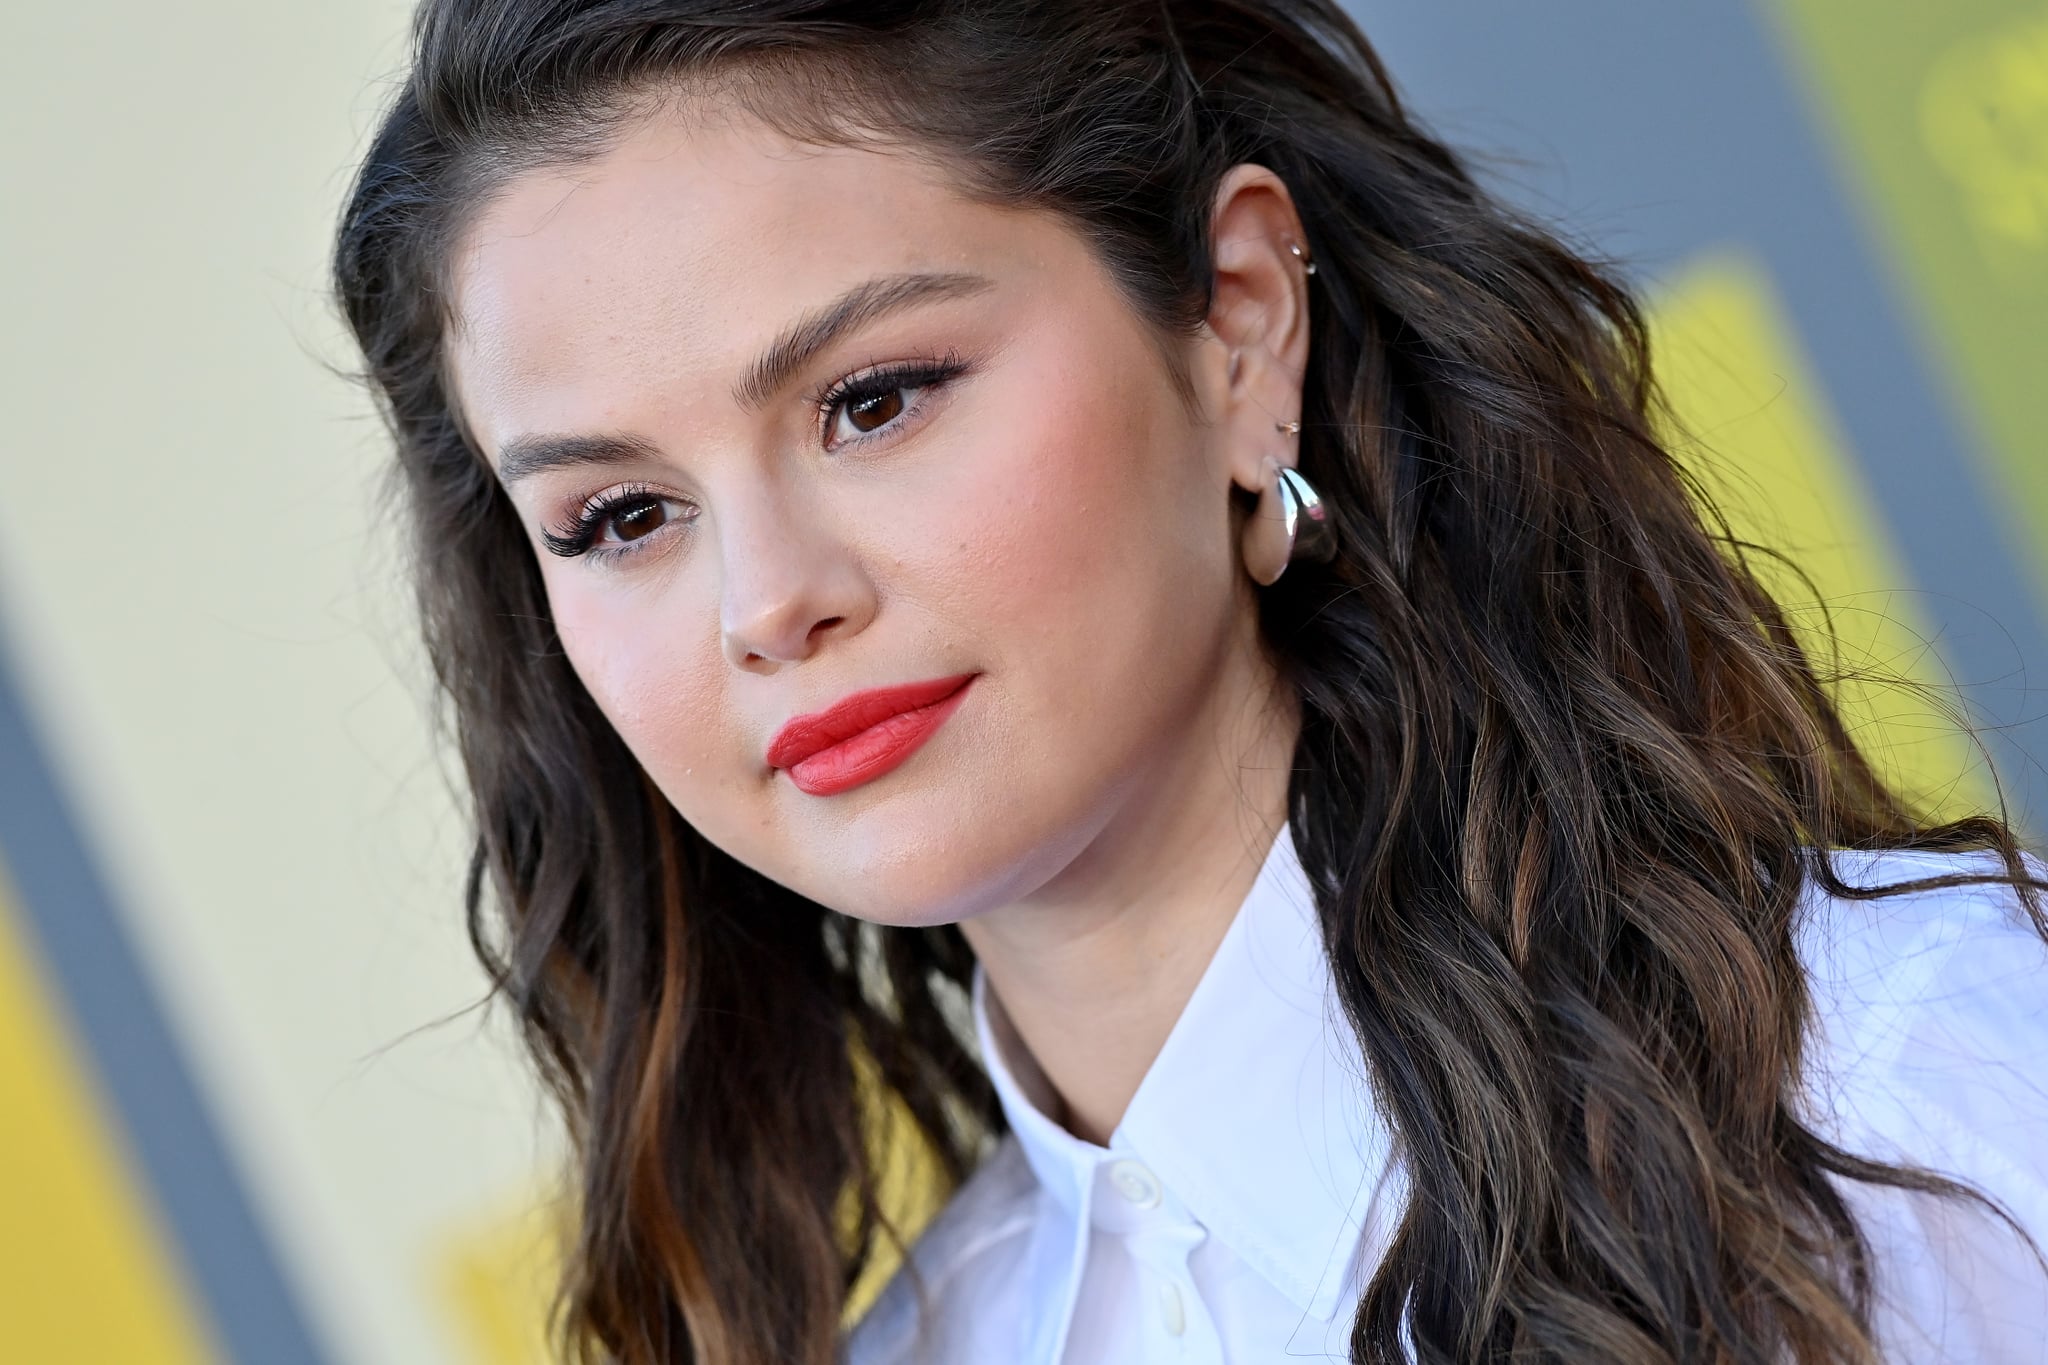 LOS ANGELES, CALIFORNIA - JUNE 11: Selena Gomez attends Hulu's 